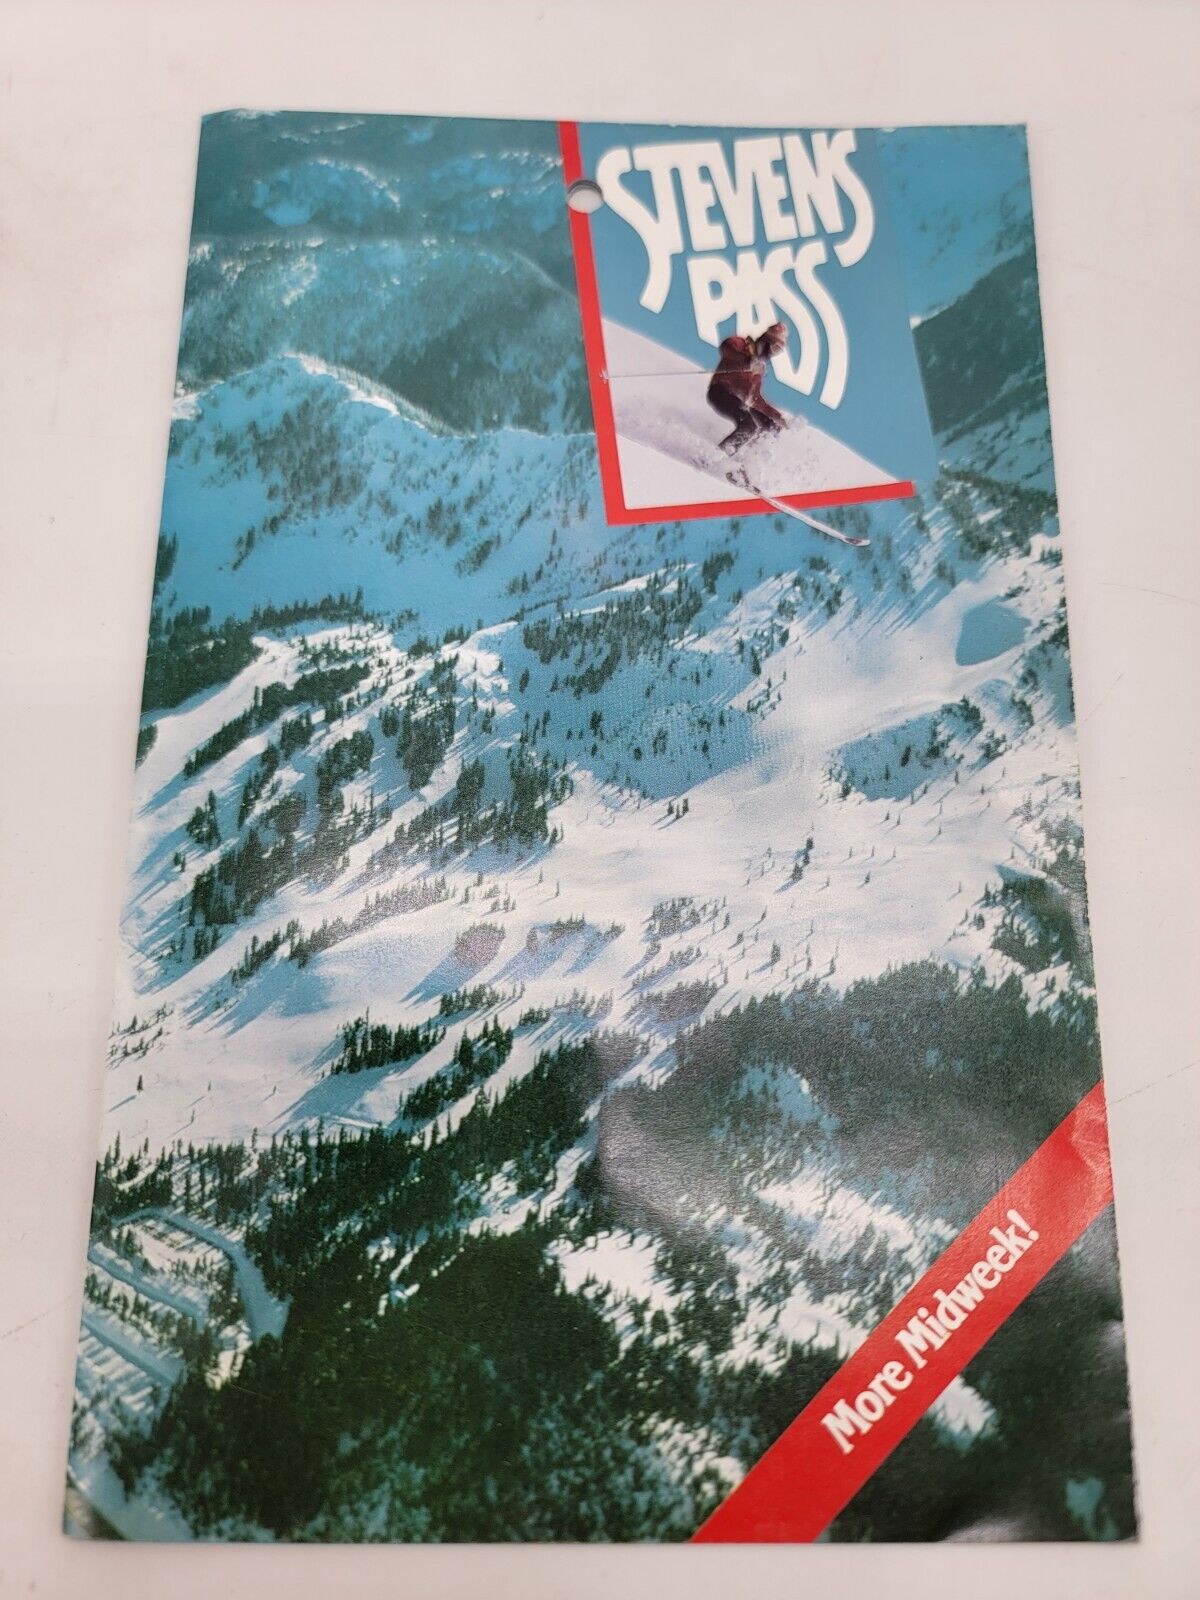 Vintage 1985/86 Stevens Pass Washington Pamphlet Brochure Mountain Ski